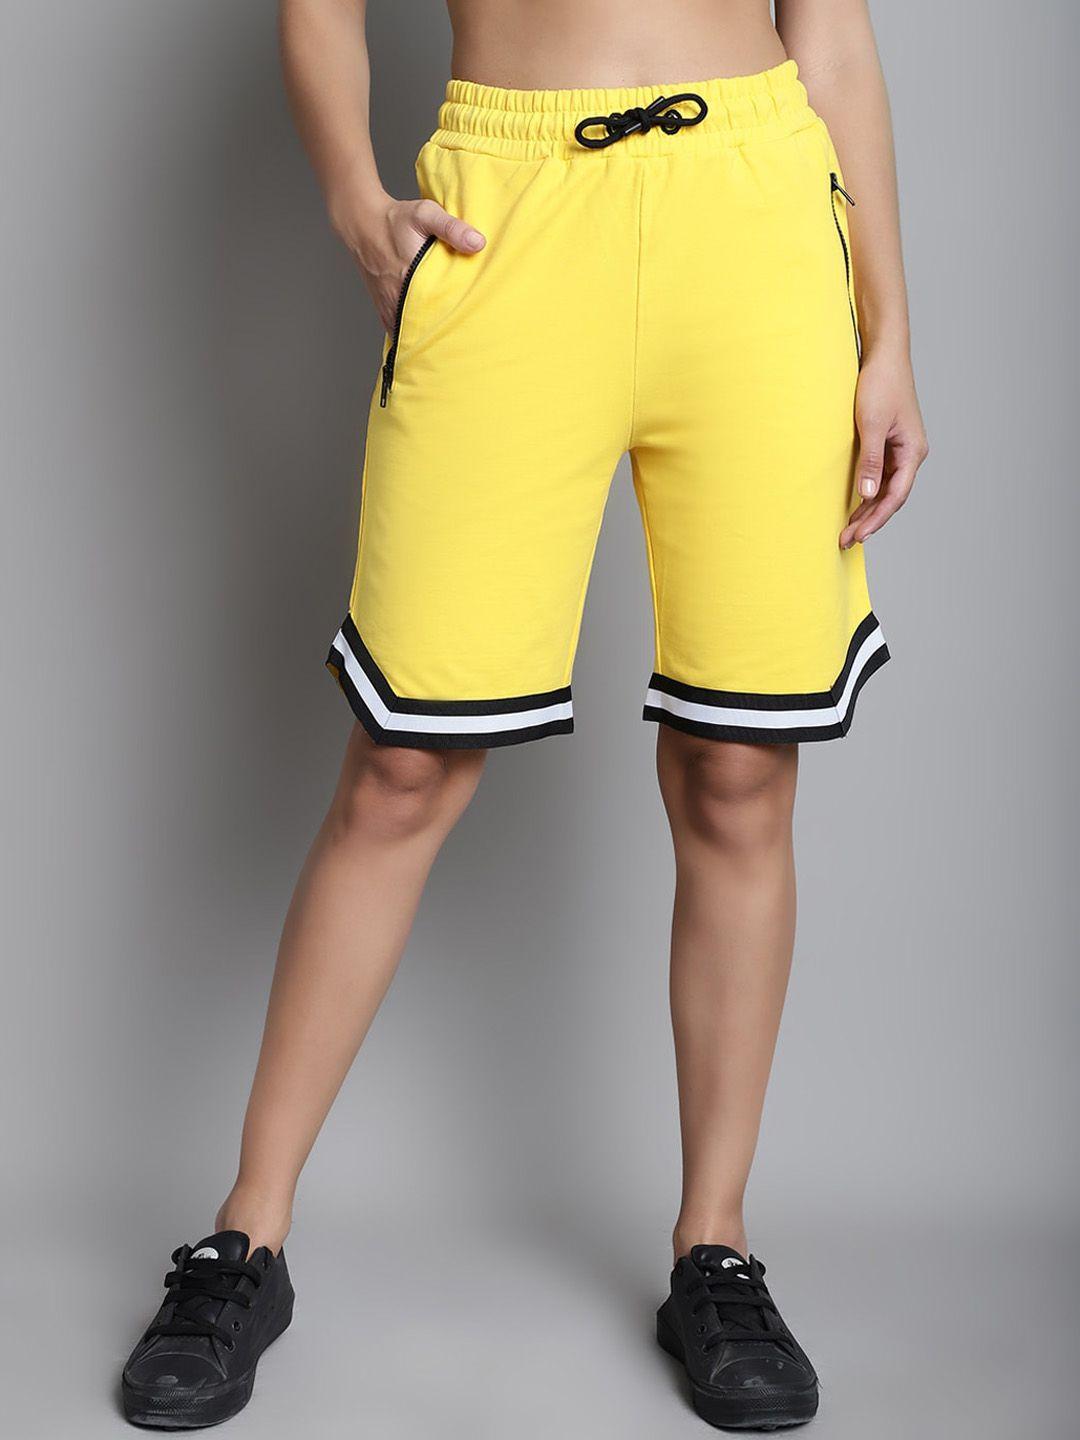 door74 women yellow loose fit sports shorts